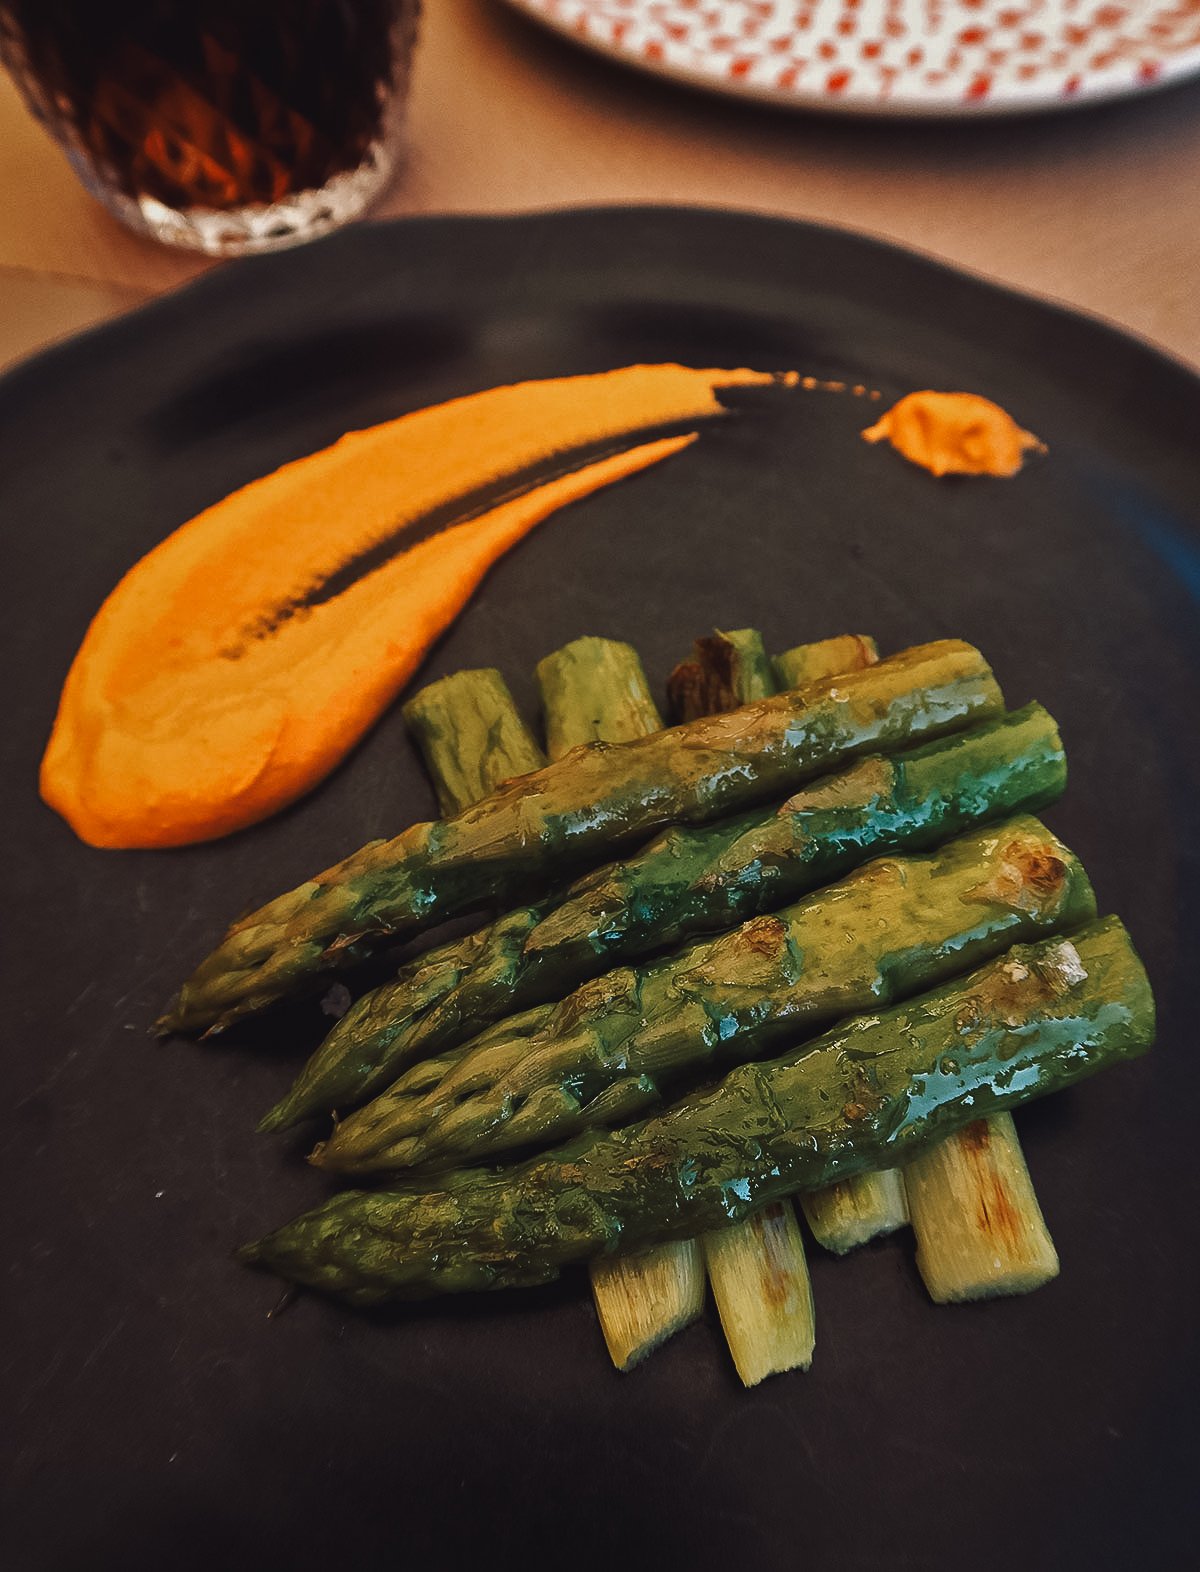 Asparagus tapas dish at a restaurant in Malaga